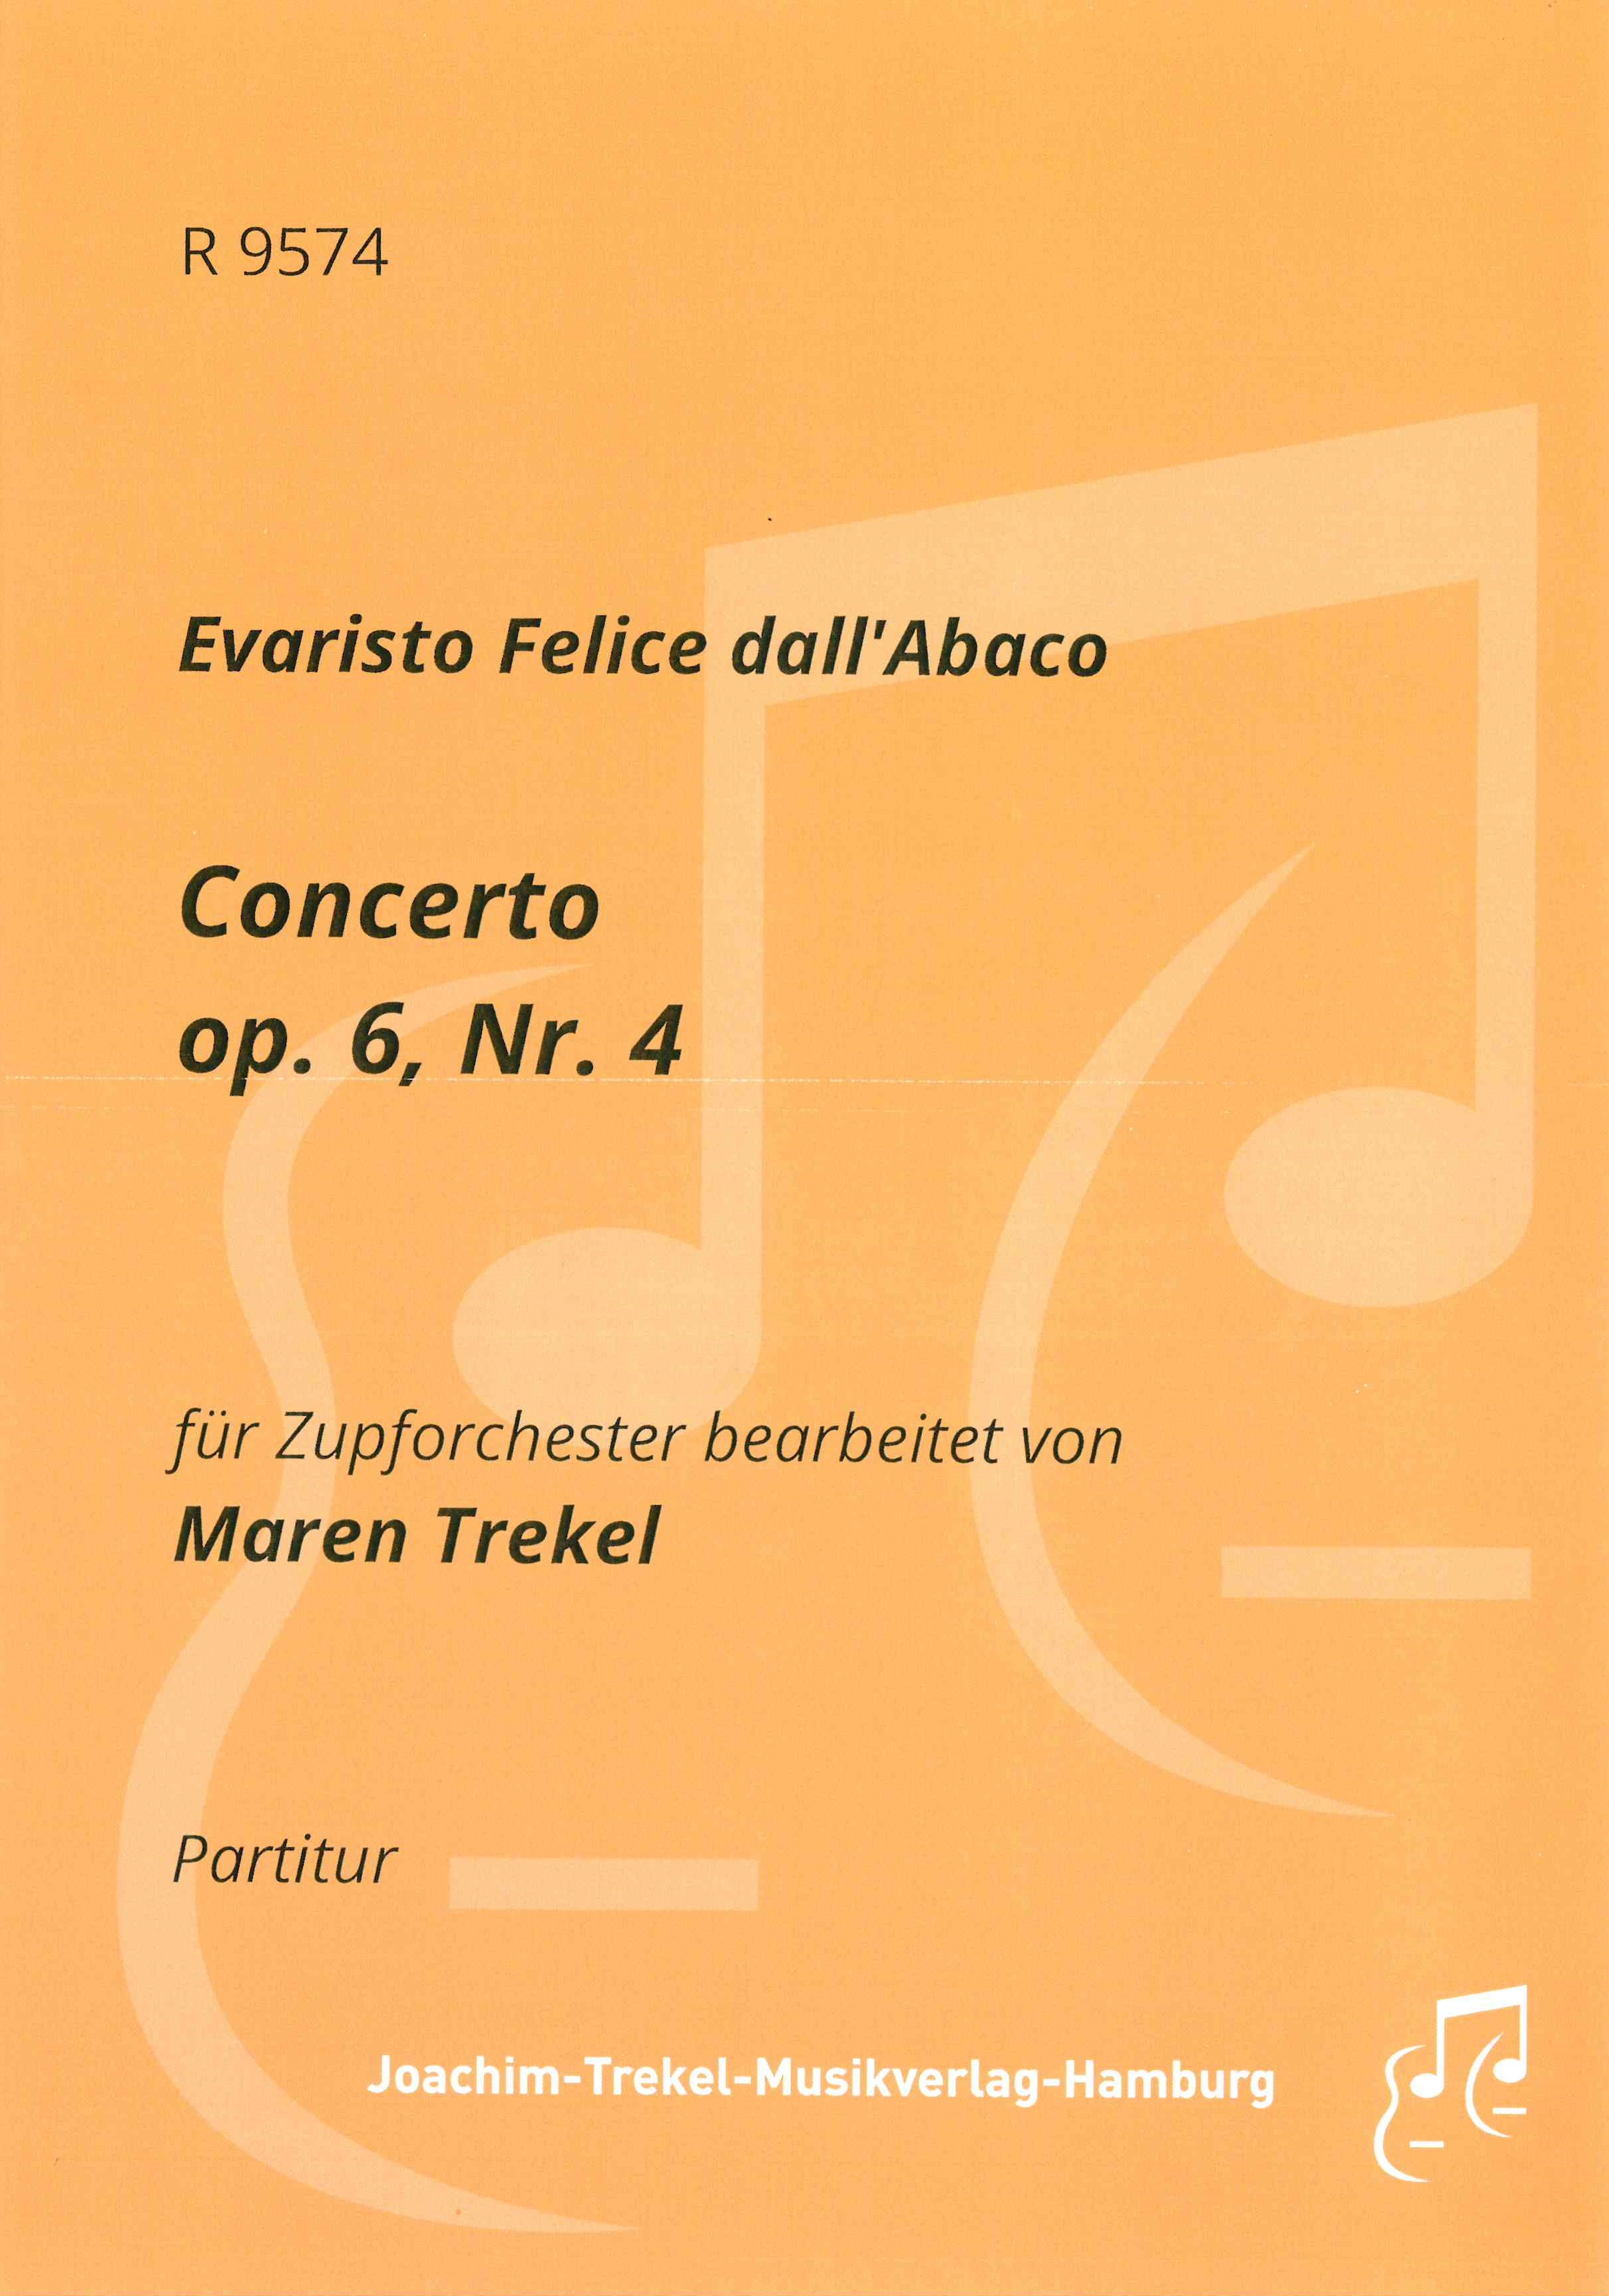 Concerto op. 6, Nr. 4